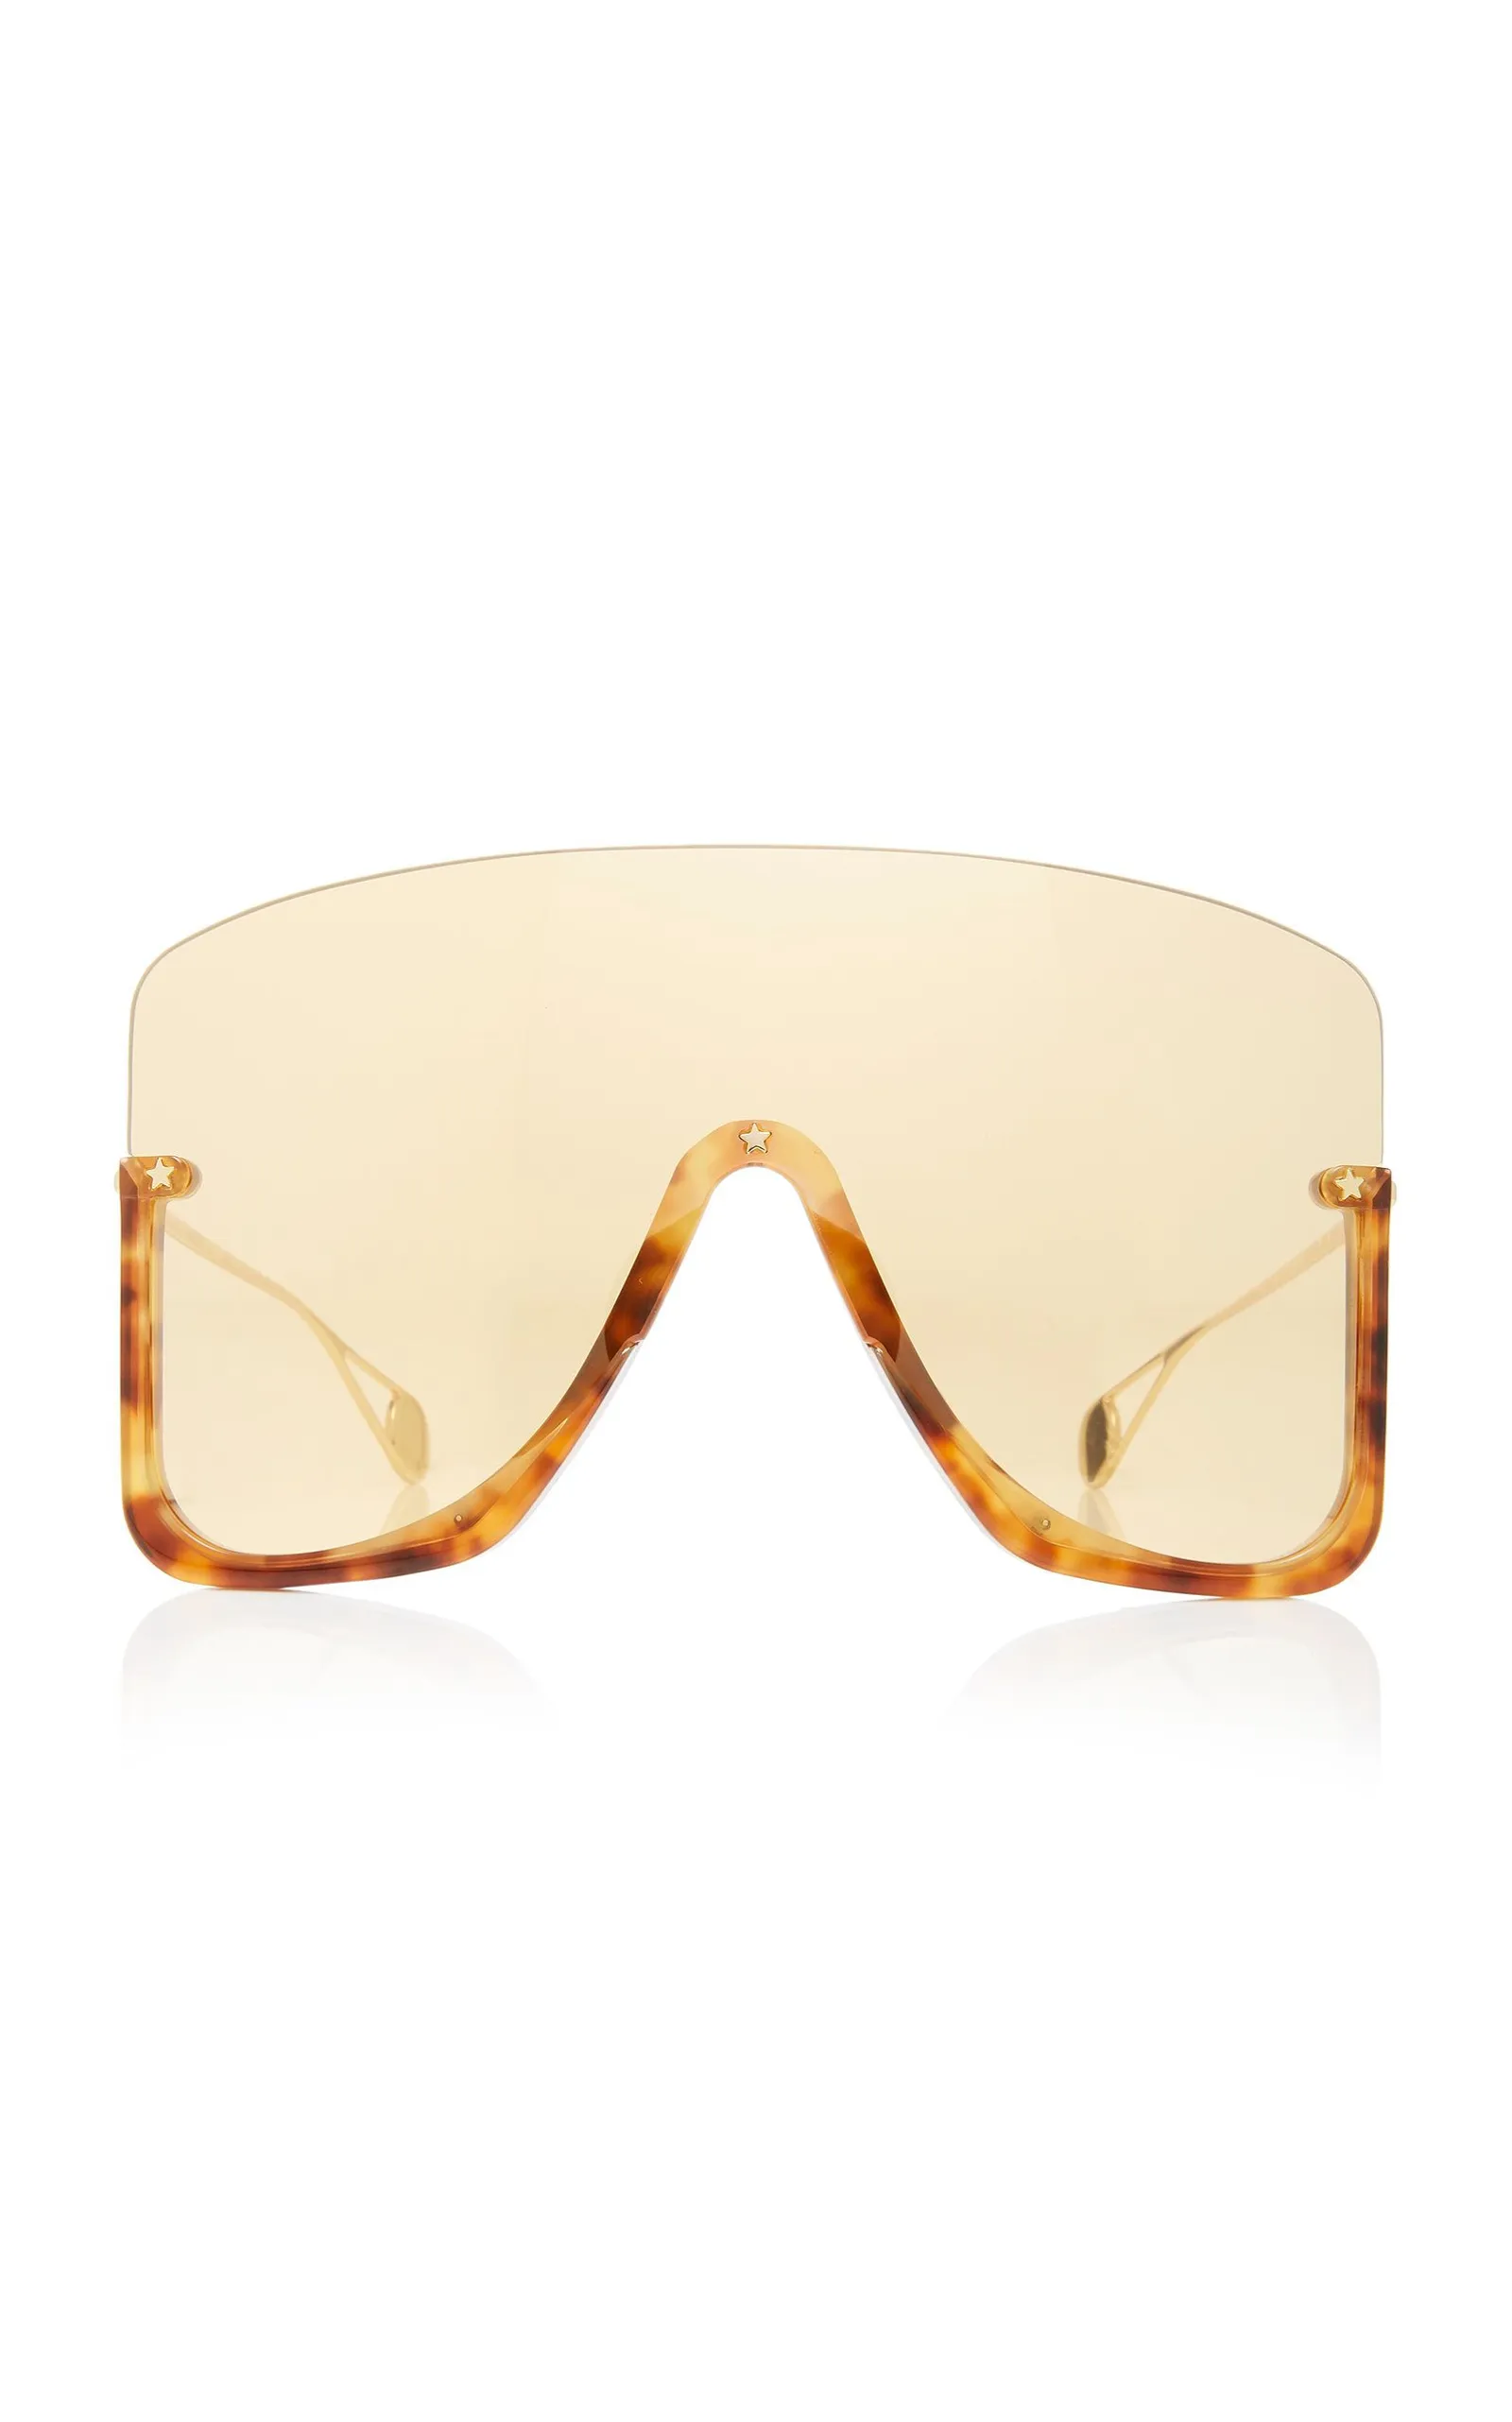 #PopbelaOOTD: Model Kacamata Shield